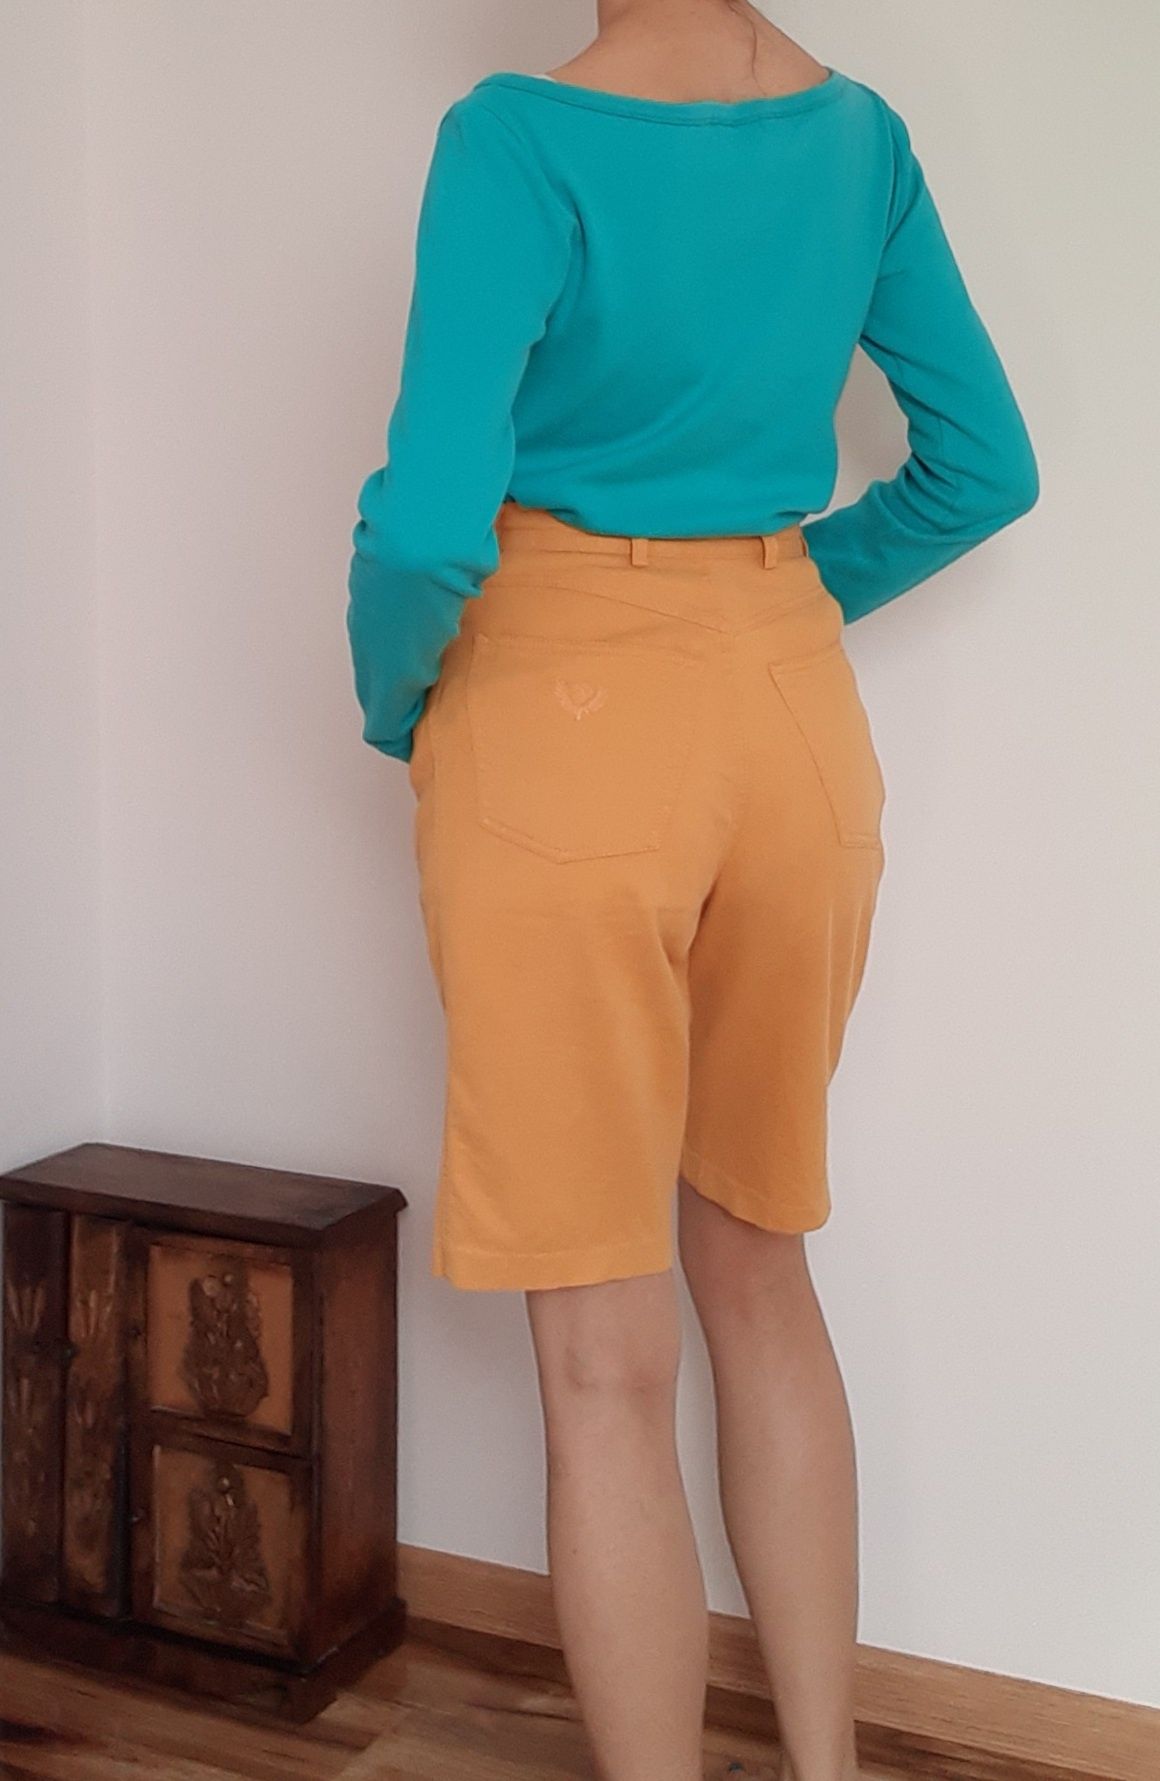 90s y2k bawełniana turkusowo-zielona bluzka Cotton turqoise blouse y2k